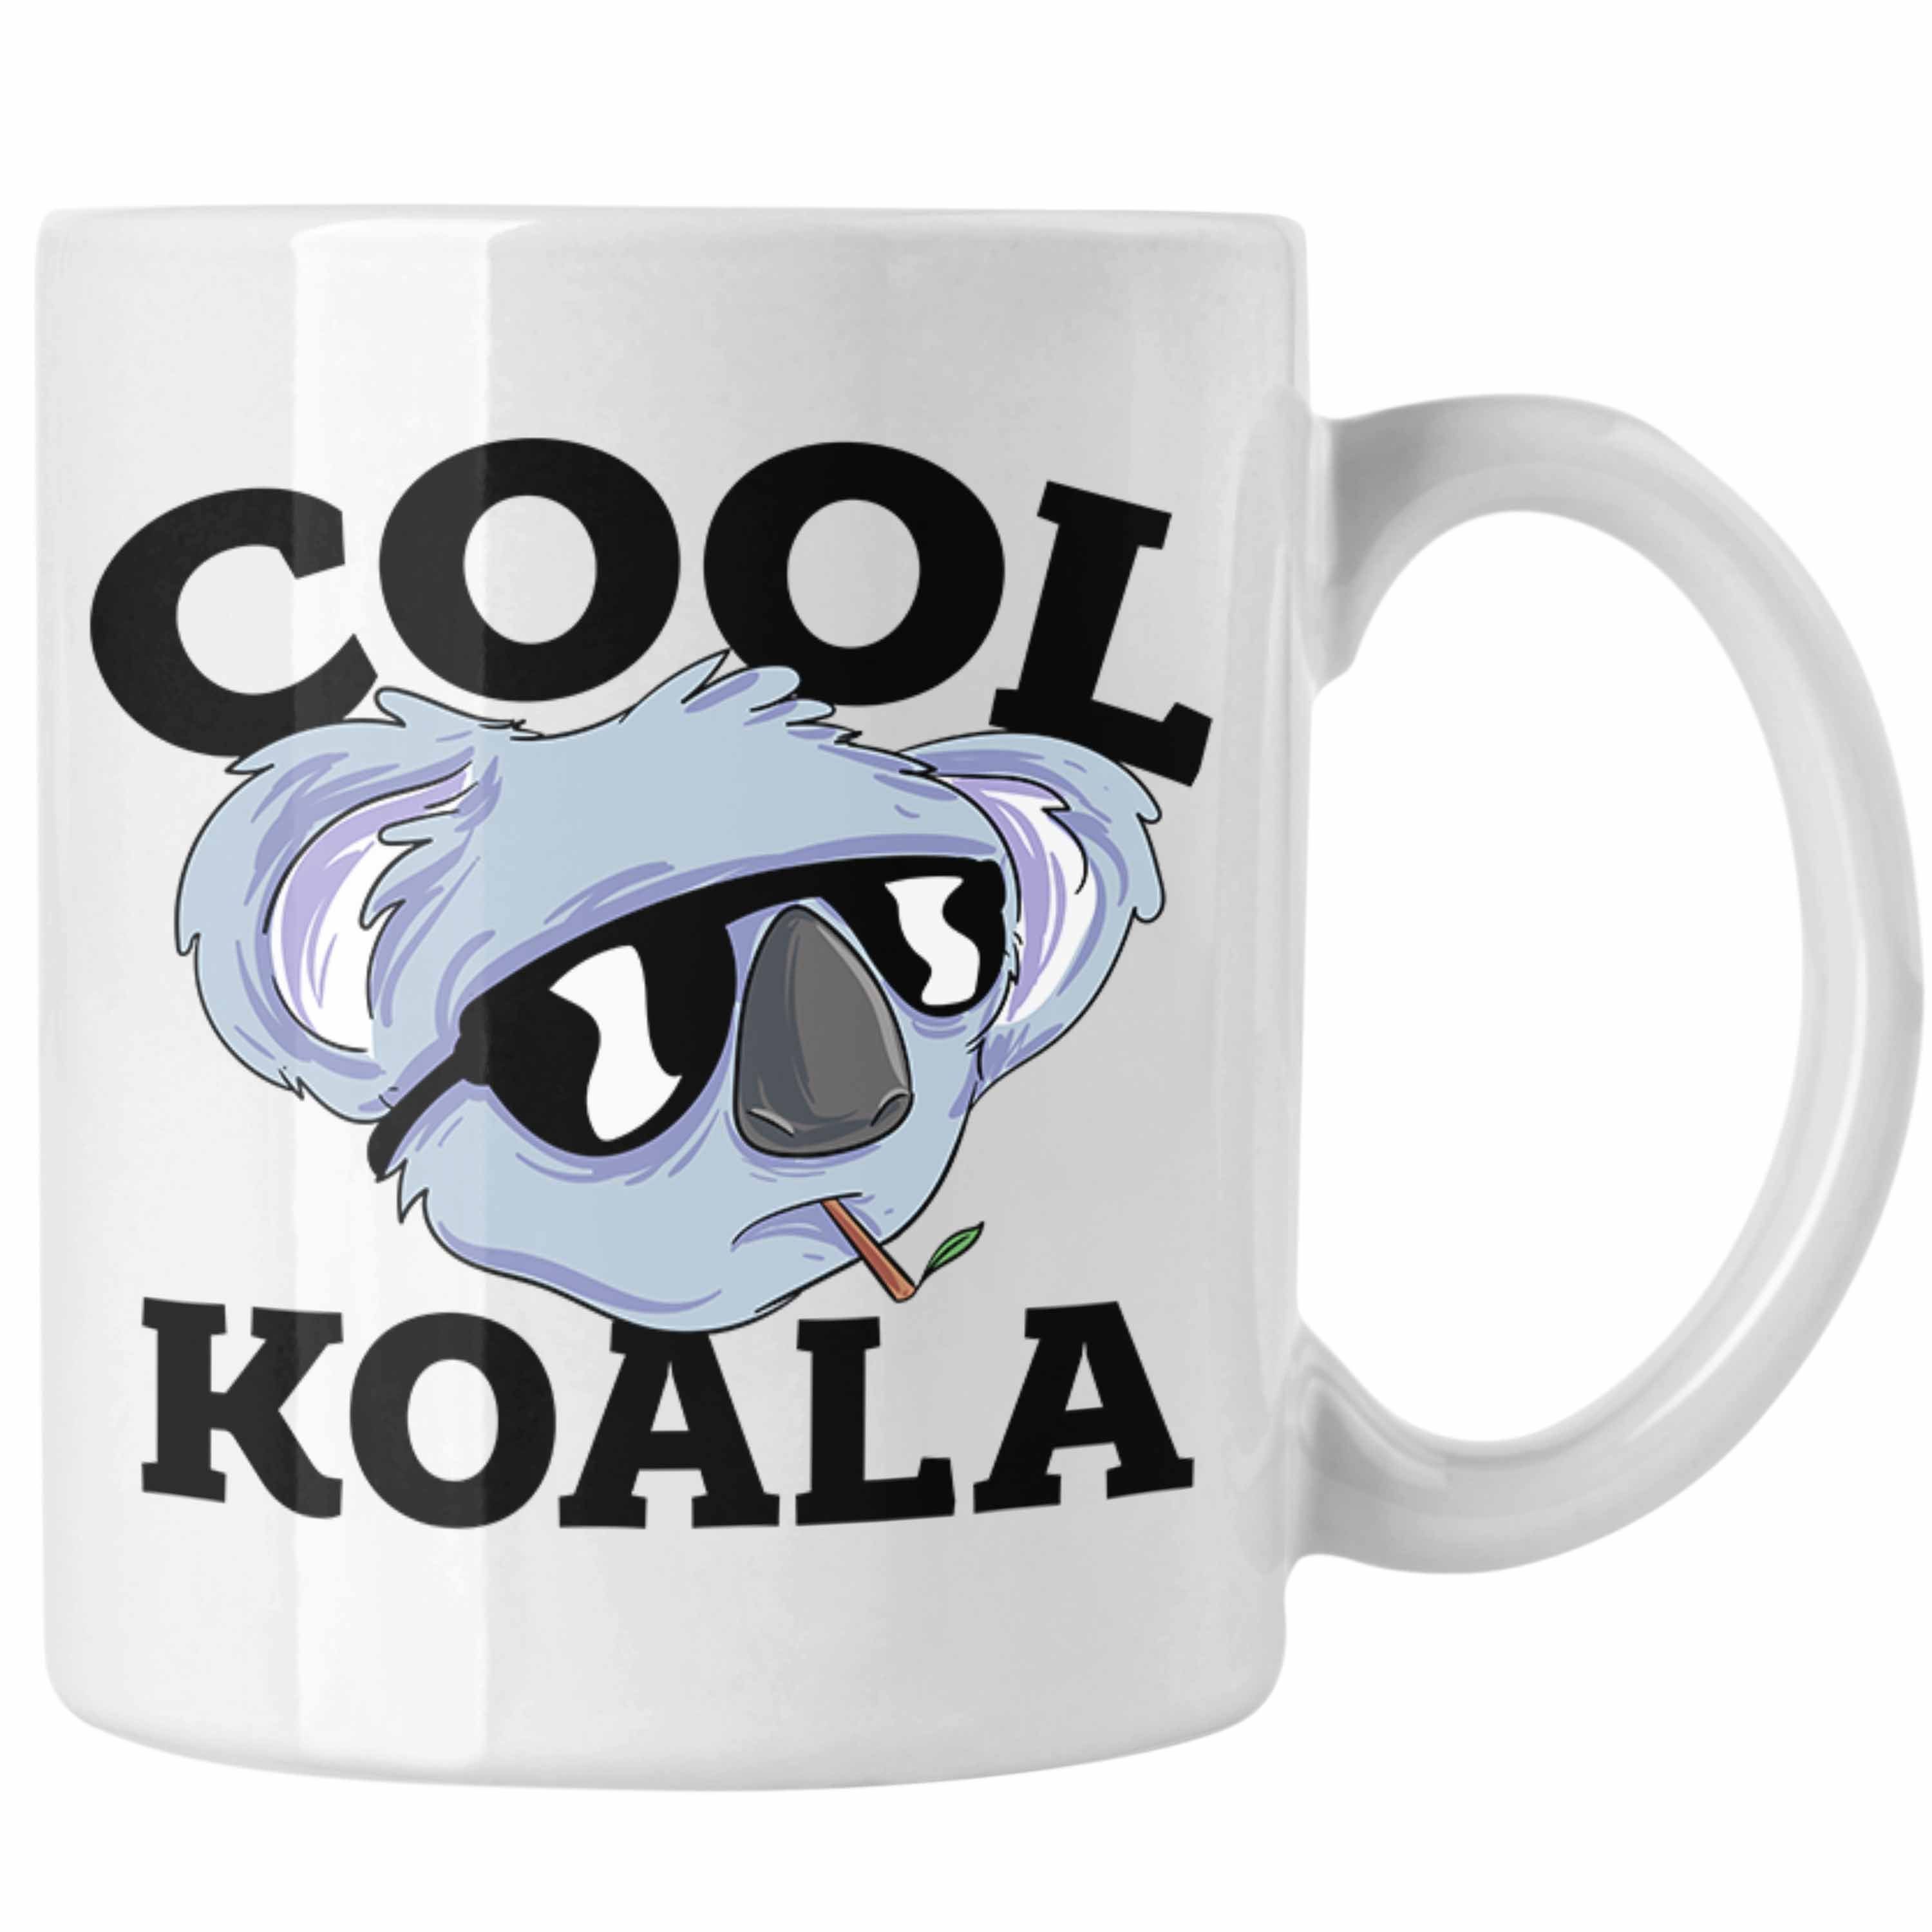 Trendation Tasse Tasse Koala Geschenkidee für Koala-Liebhaber Tasse Koala-Aufdruck